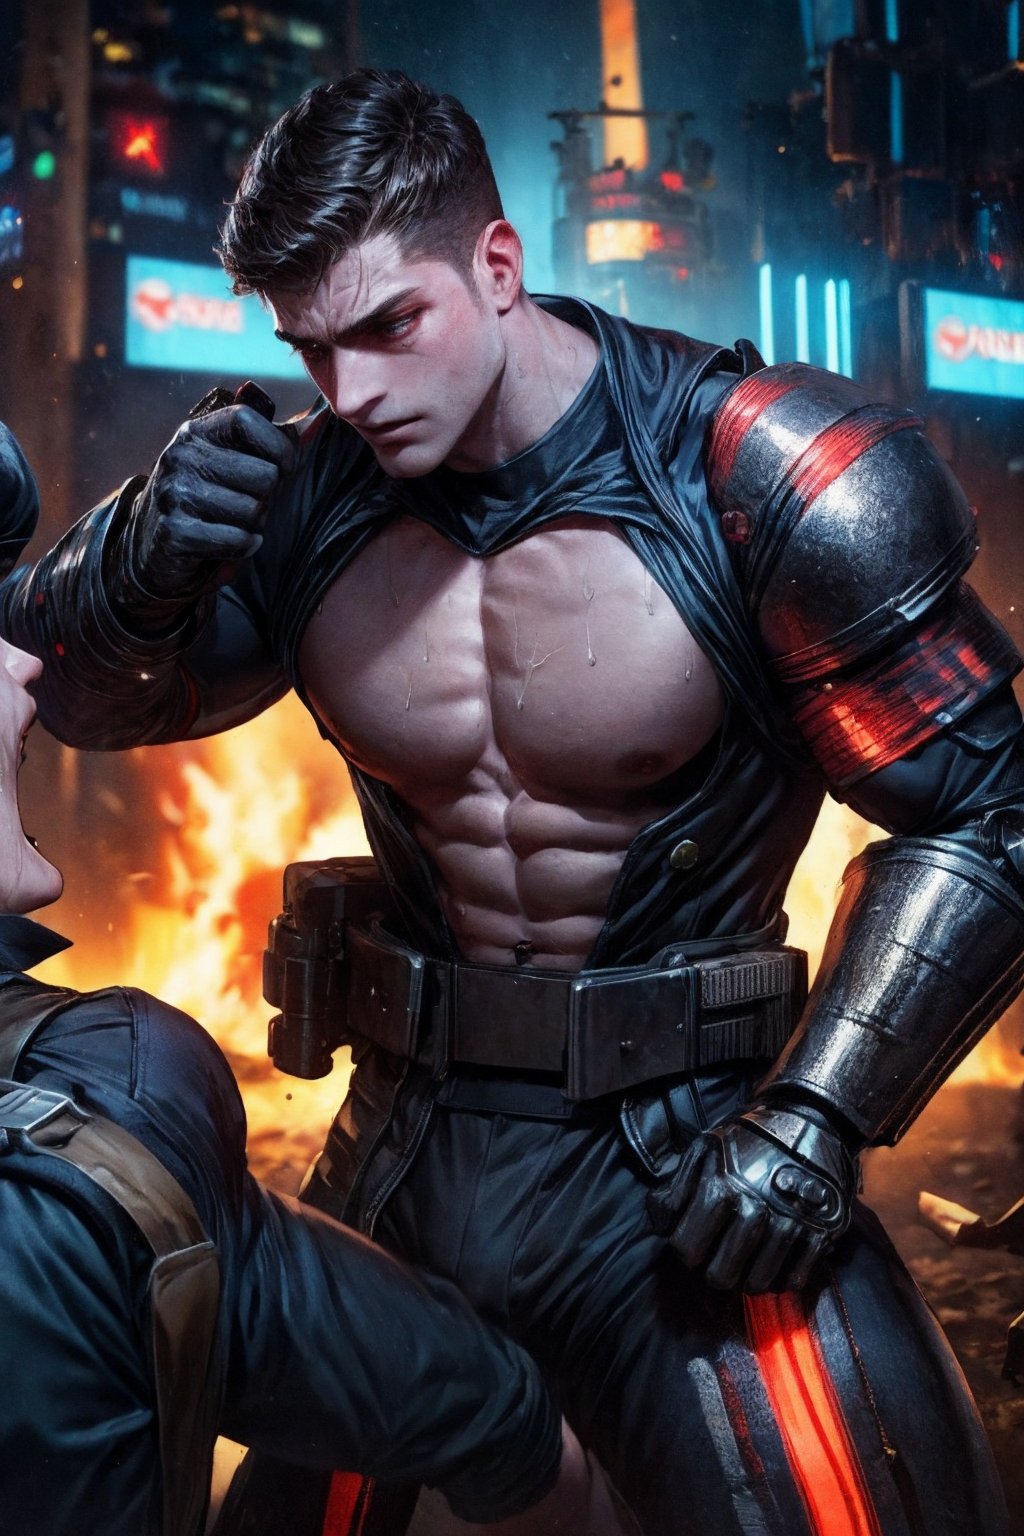 2boy battling, cyberpunk clothes and armour, 4K, large_muscles, hot, sweating, battleships, cyberpunk